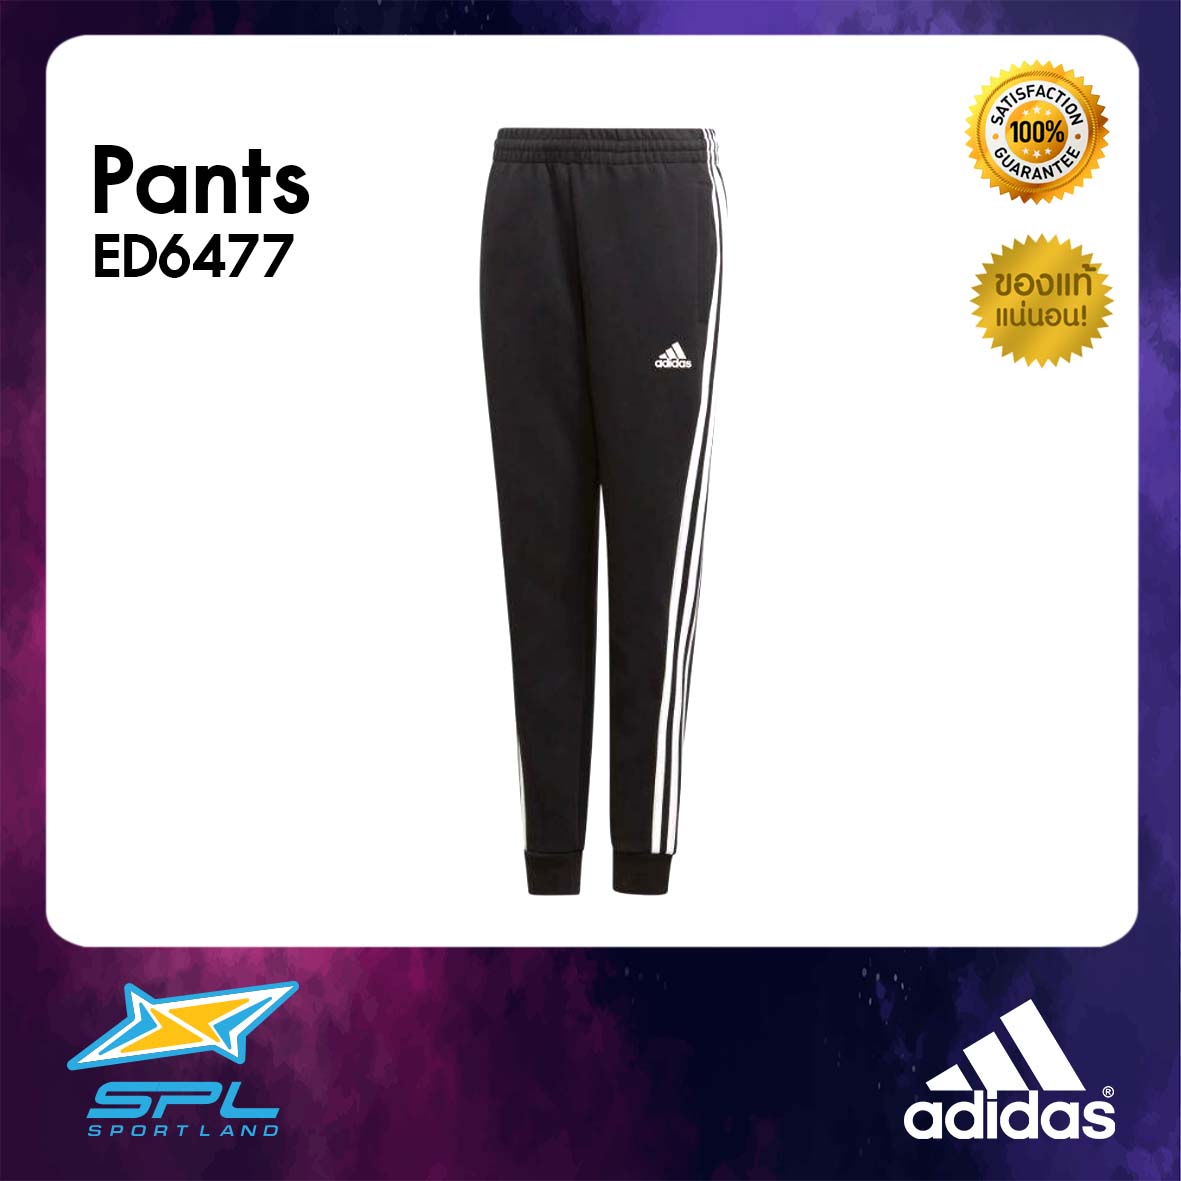 Adidas กางเกงเทรนนิ่ง อาดิดาส กางเกงกีฬา เด็กผู้ชาย กางเกงขายาว เด็ก Training Junior Boys Pants MH BOS ED6477 BK(1500)